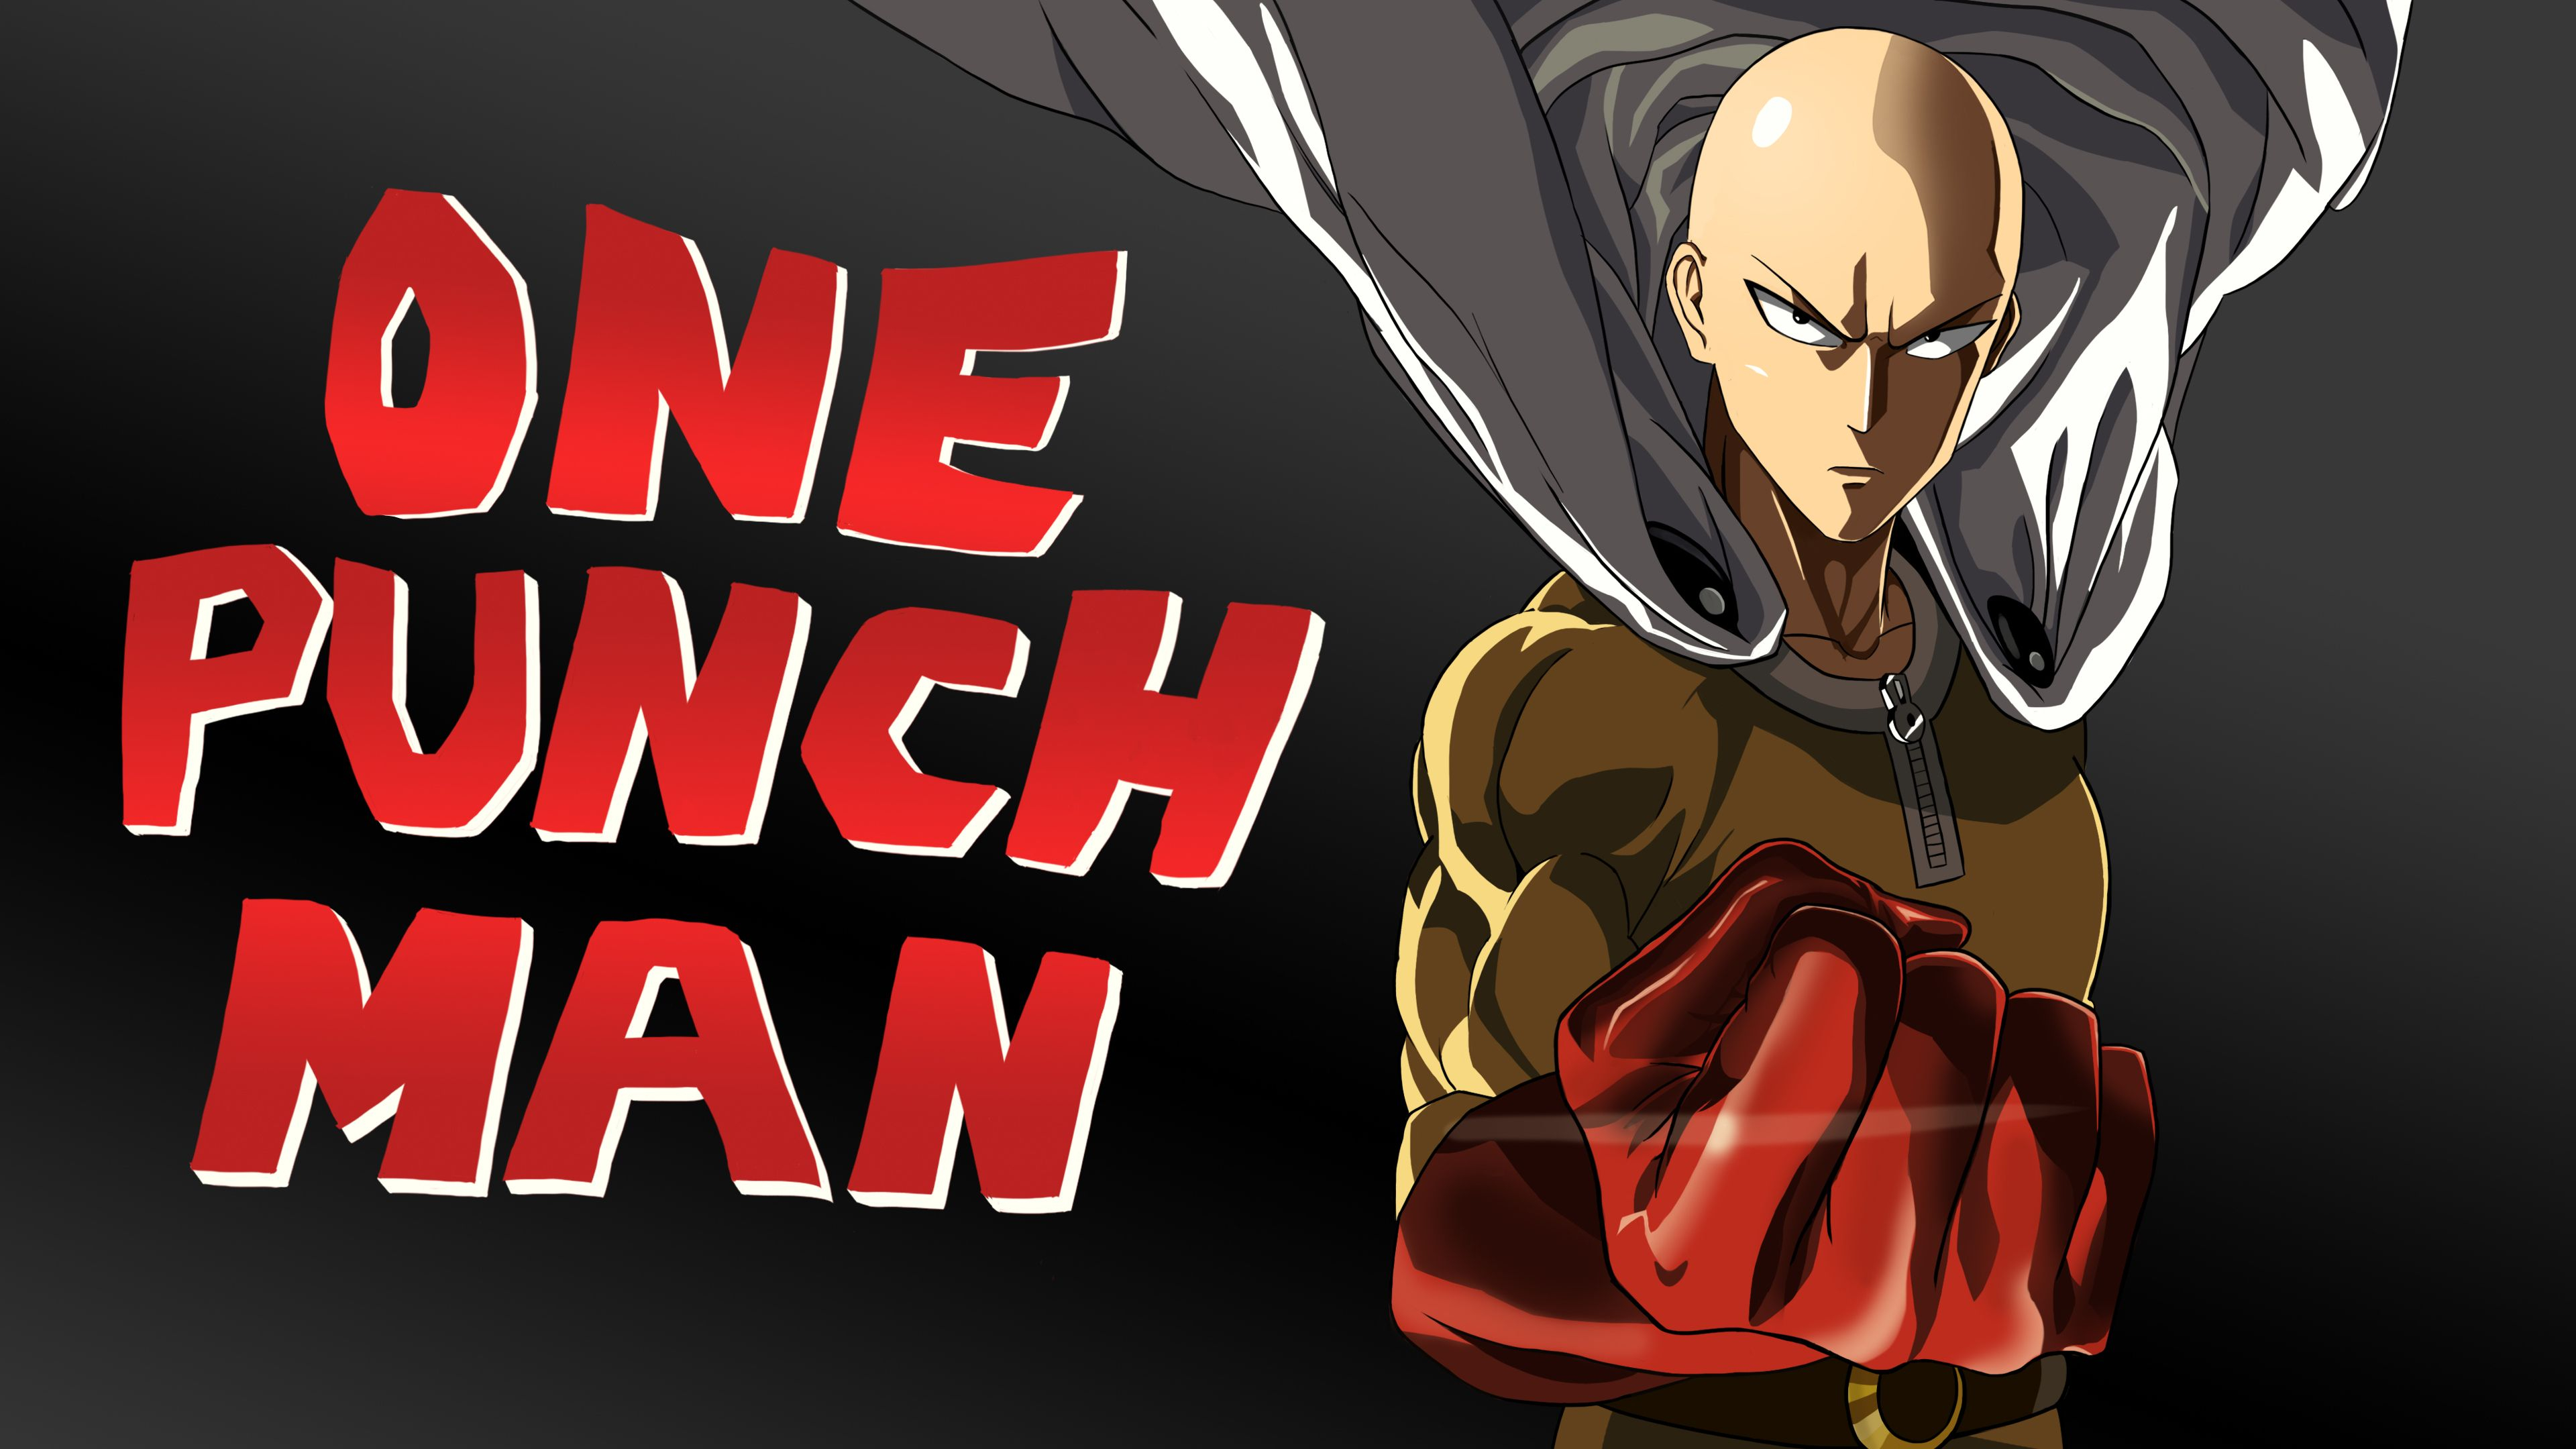 3840x2160 One Punch Man Desktop Wallpaper images | Punch man, 5 anime